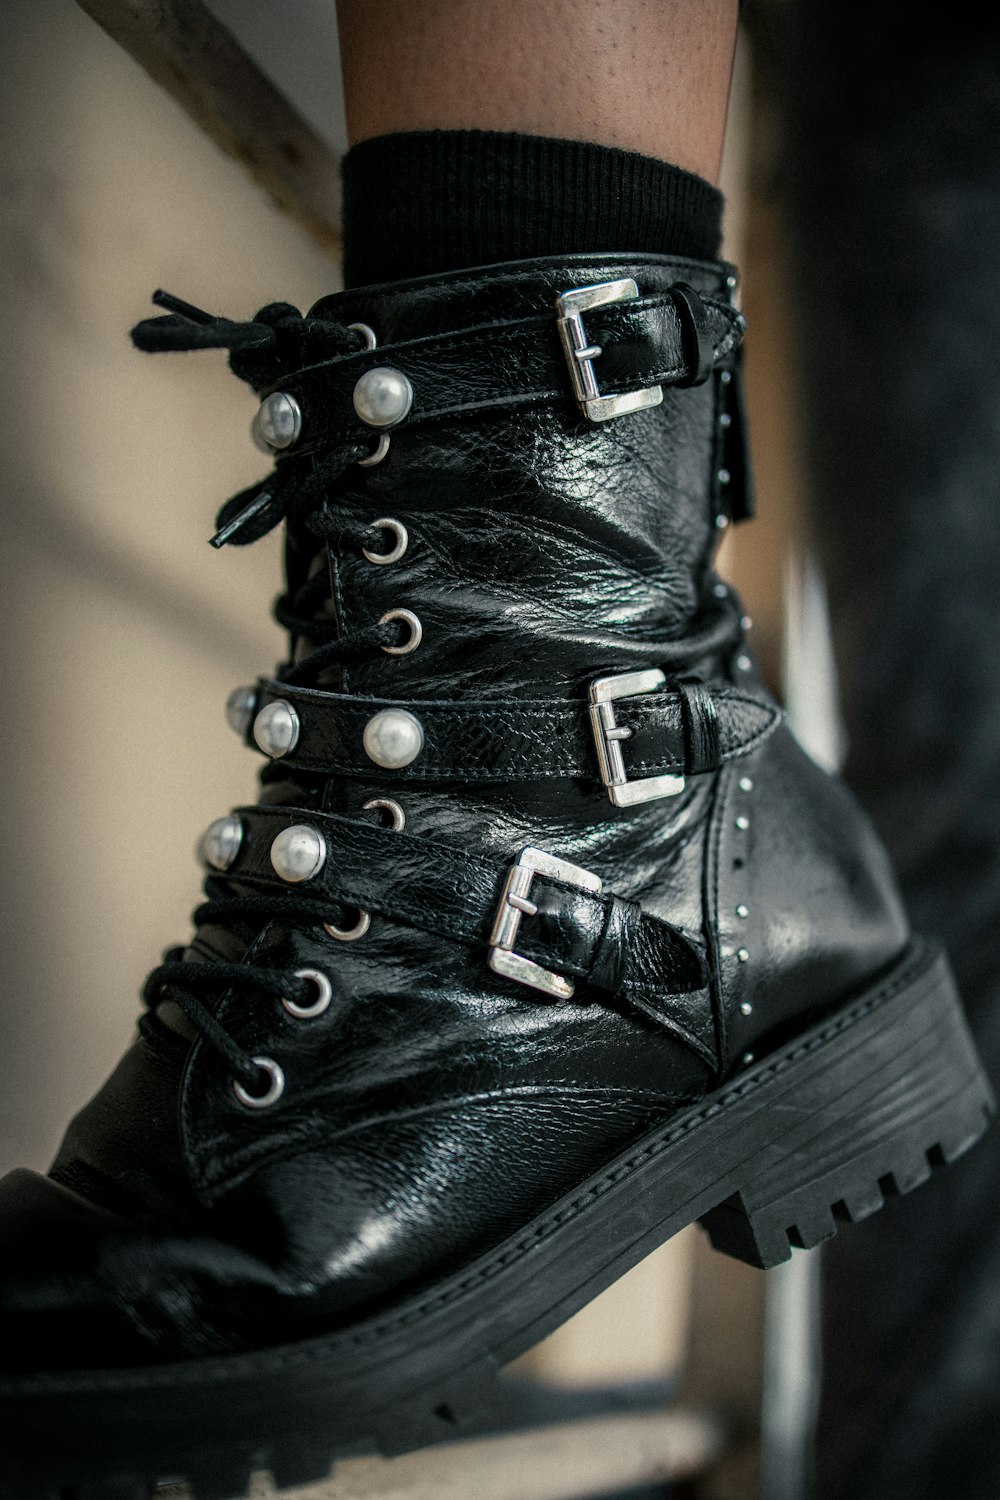 Black leather lace up boots photo – Free Miami Image on Unsplash